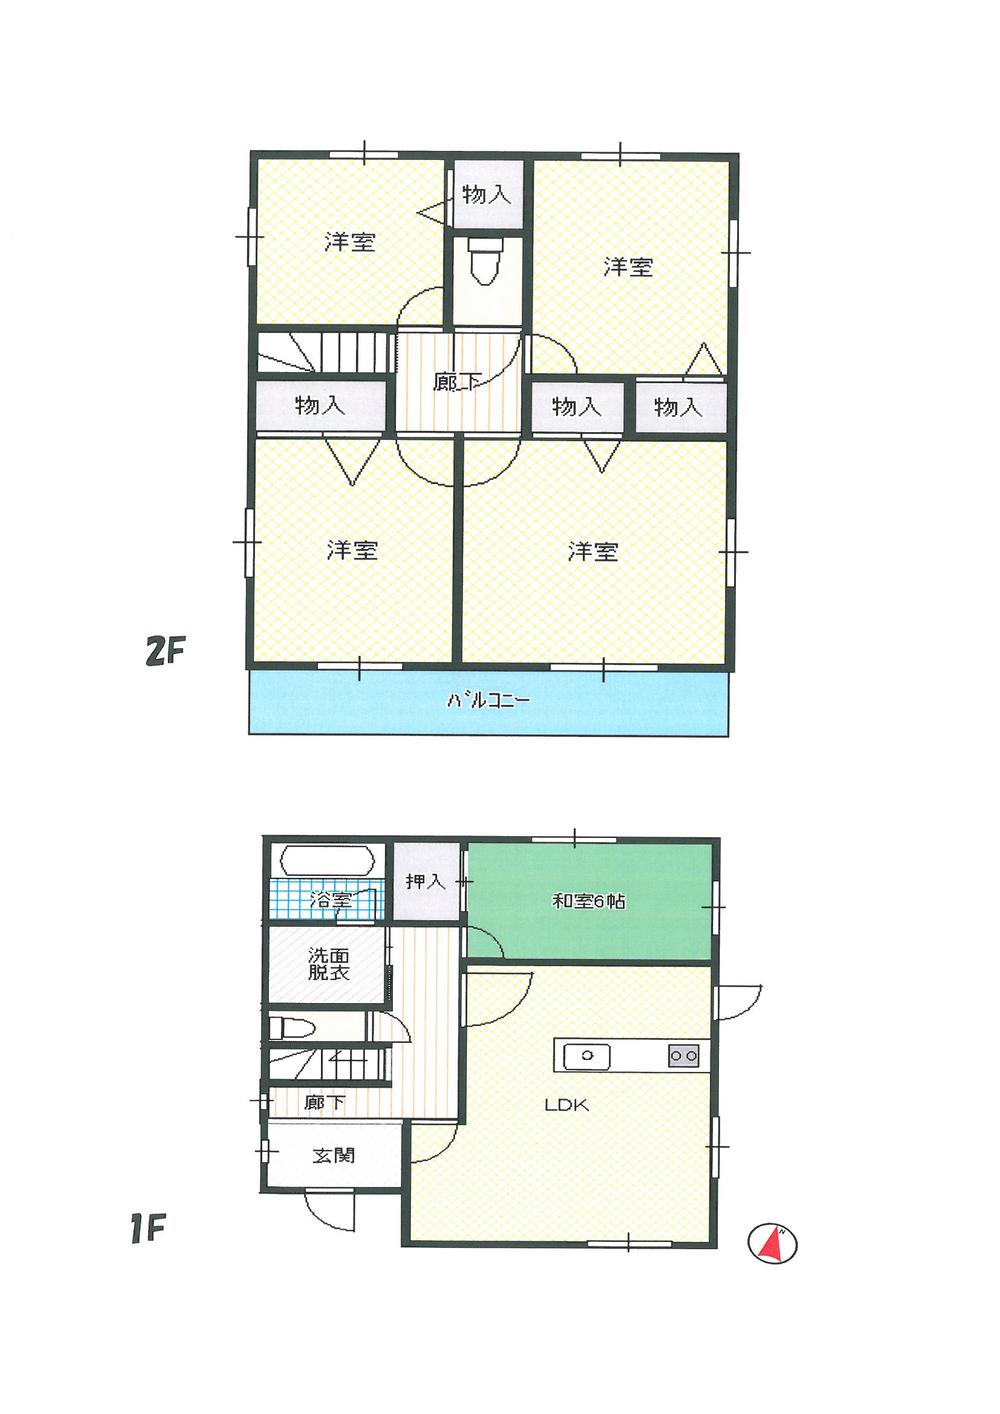 Floor plan. 41,900,000 yen, 5LDK, Land area 131.19 sq m , Building area 105.3 sq m